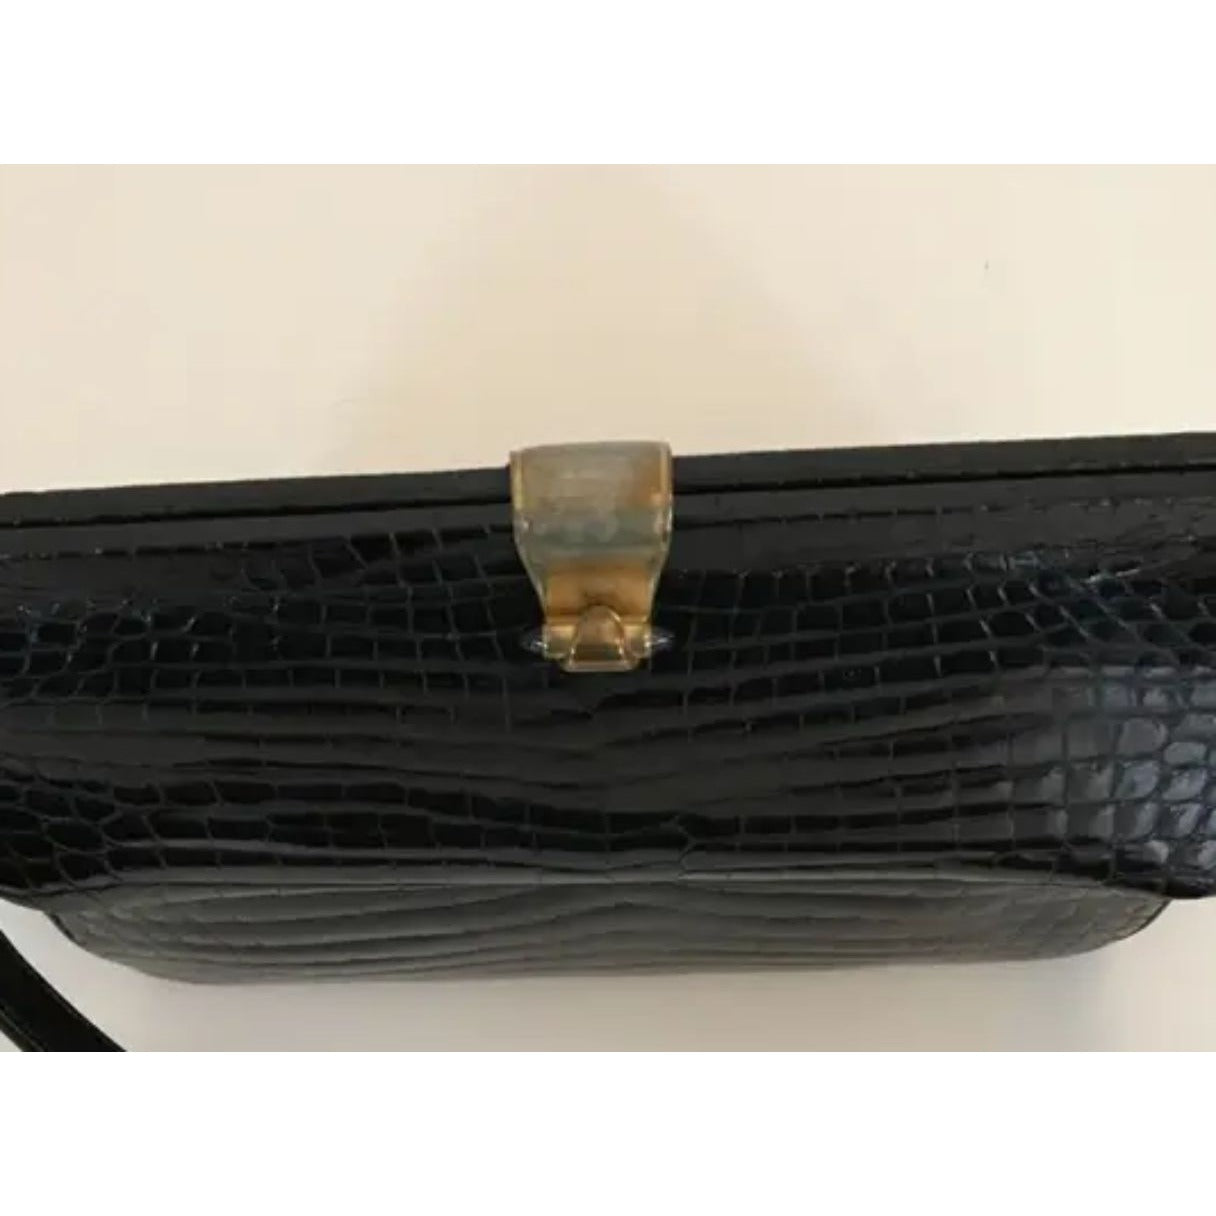 Lancel dark navy crocodile leather boxy satchel style purse